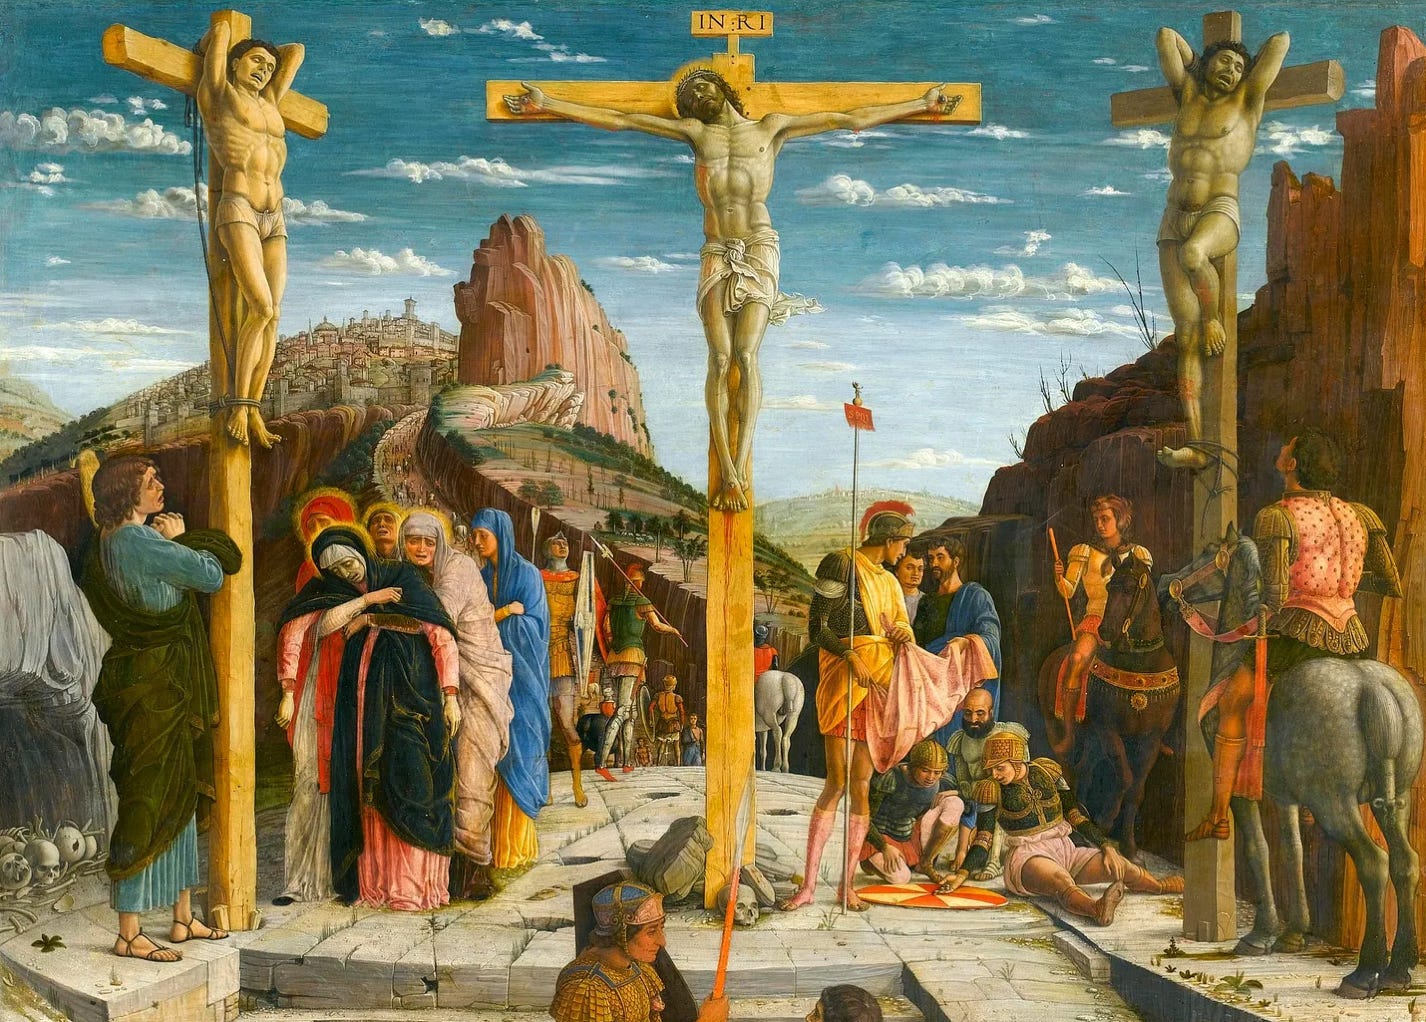 Jesus' passion and crucifixion